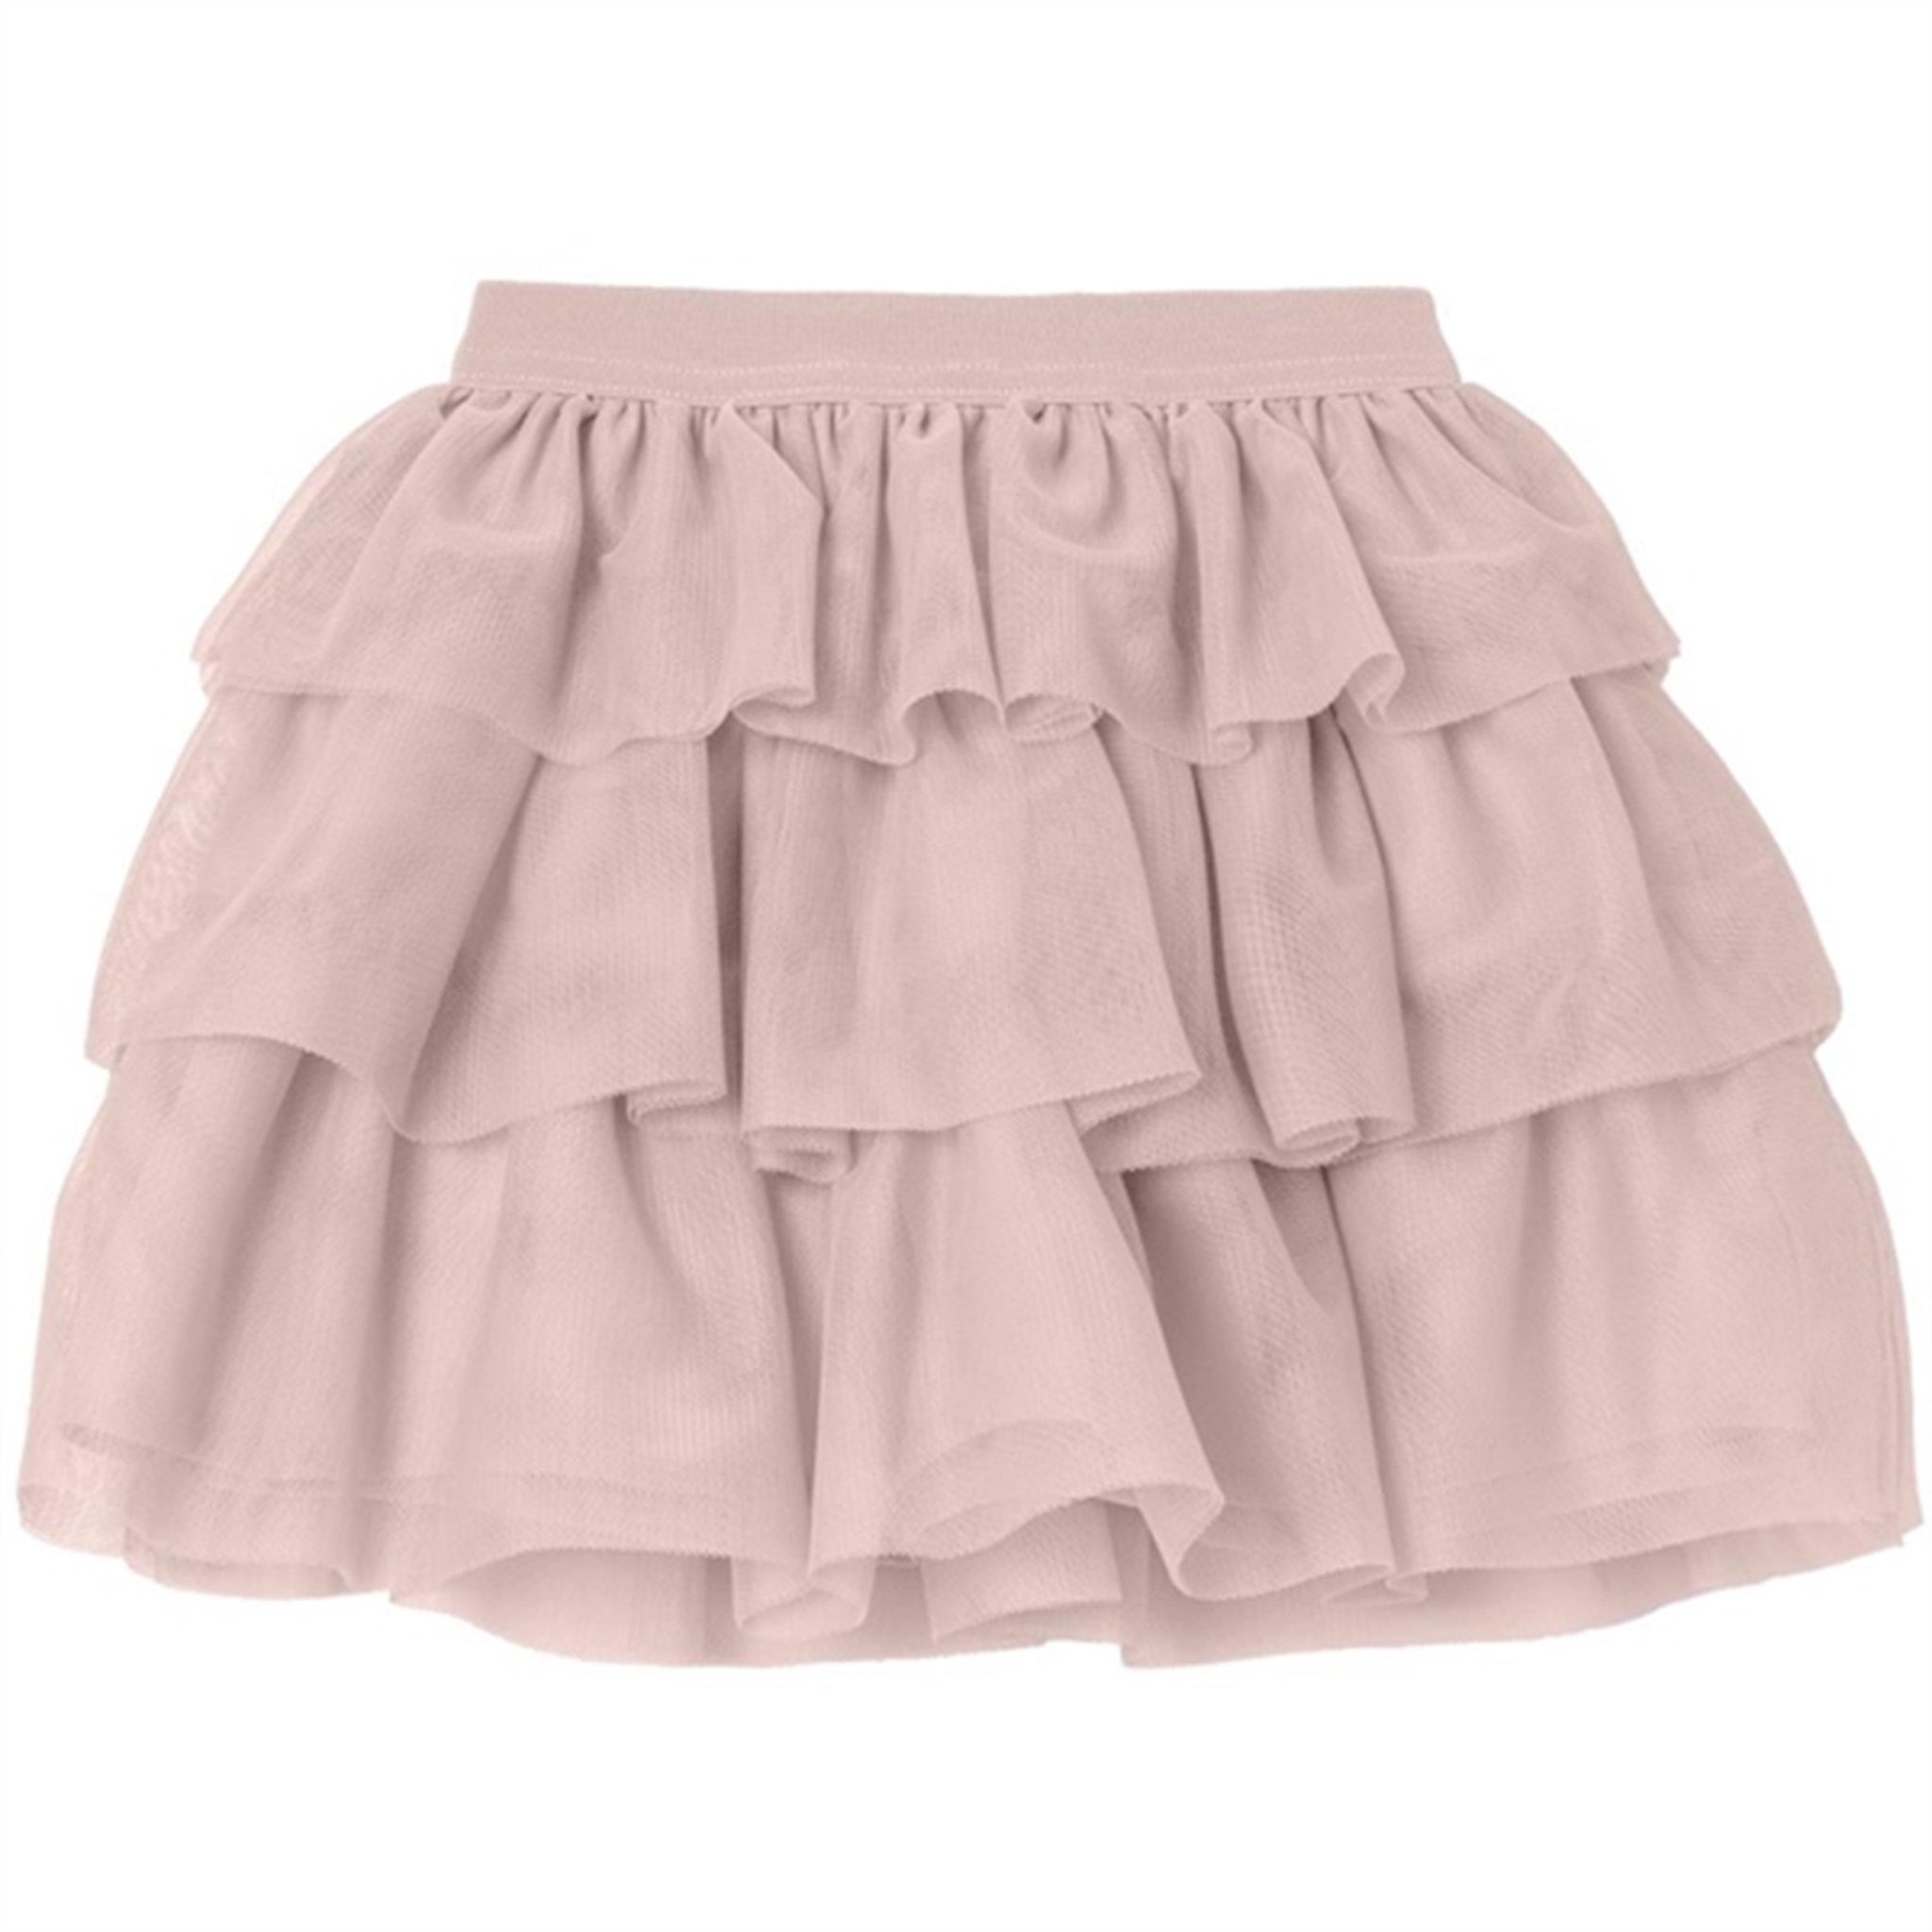 Name it Sepia Rose Betrille Tulle Skirt